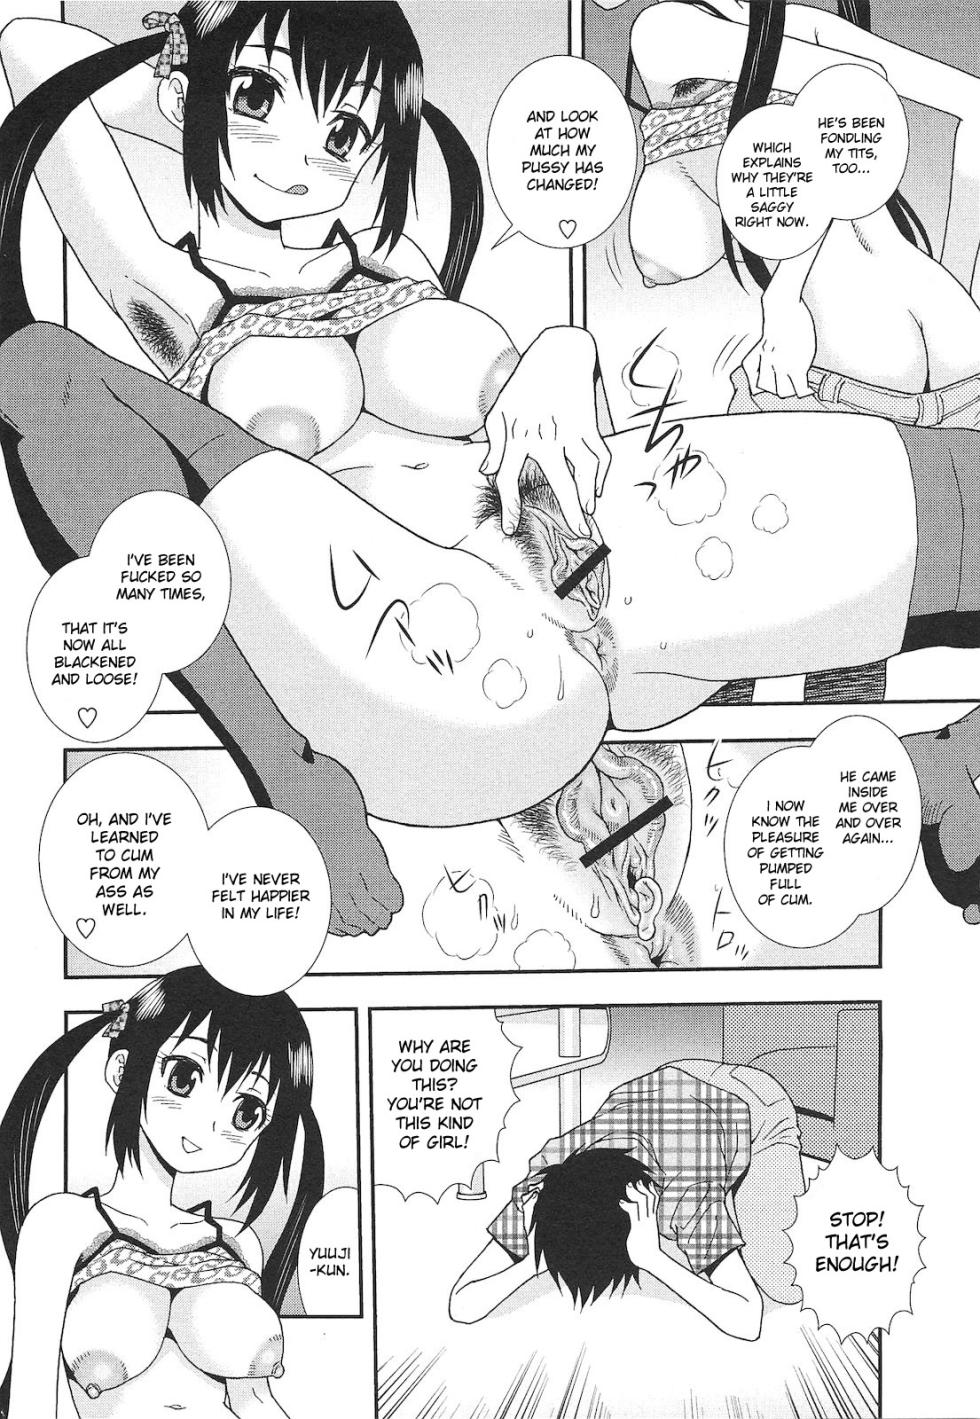 A Lovely Scenery [Shinozaki Rei] - Page 8